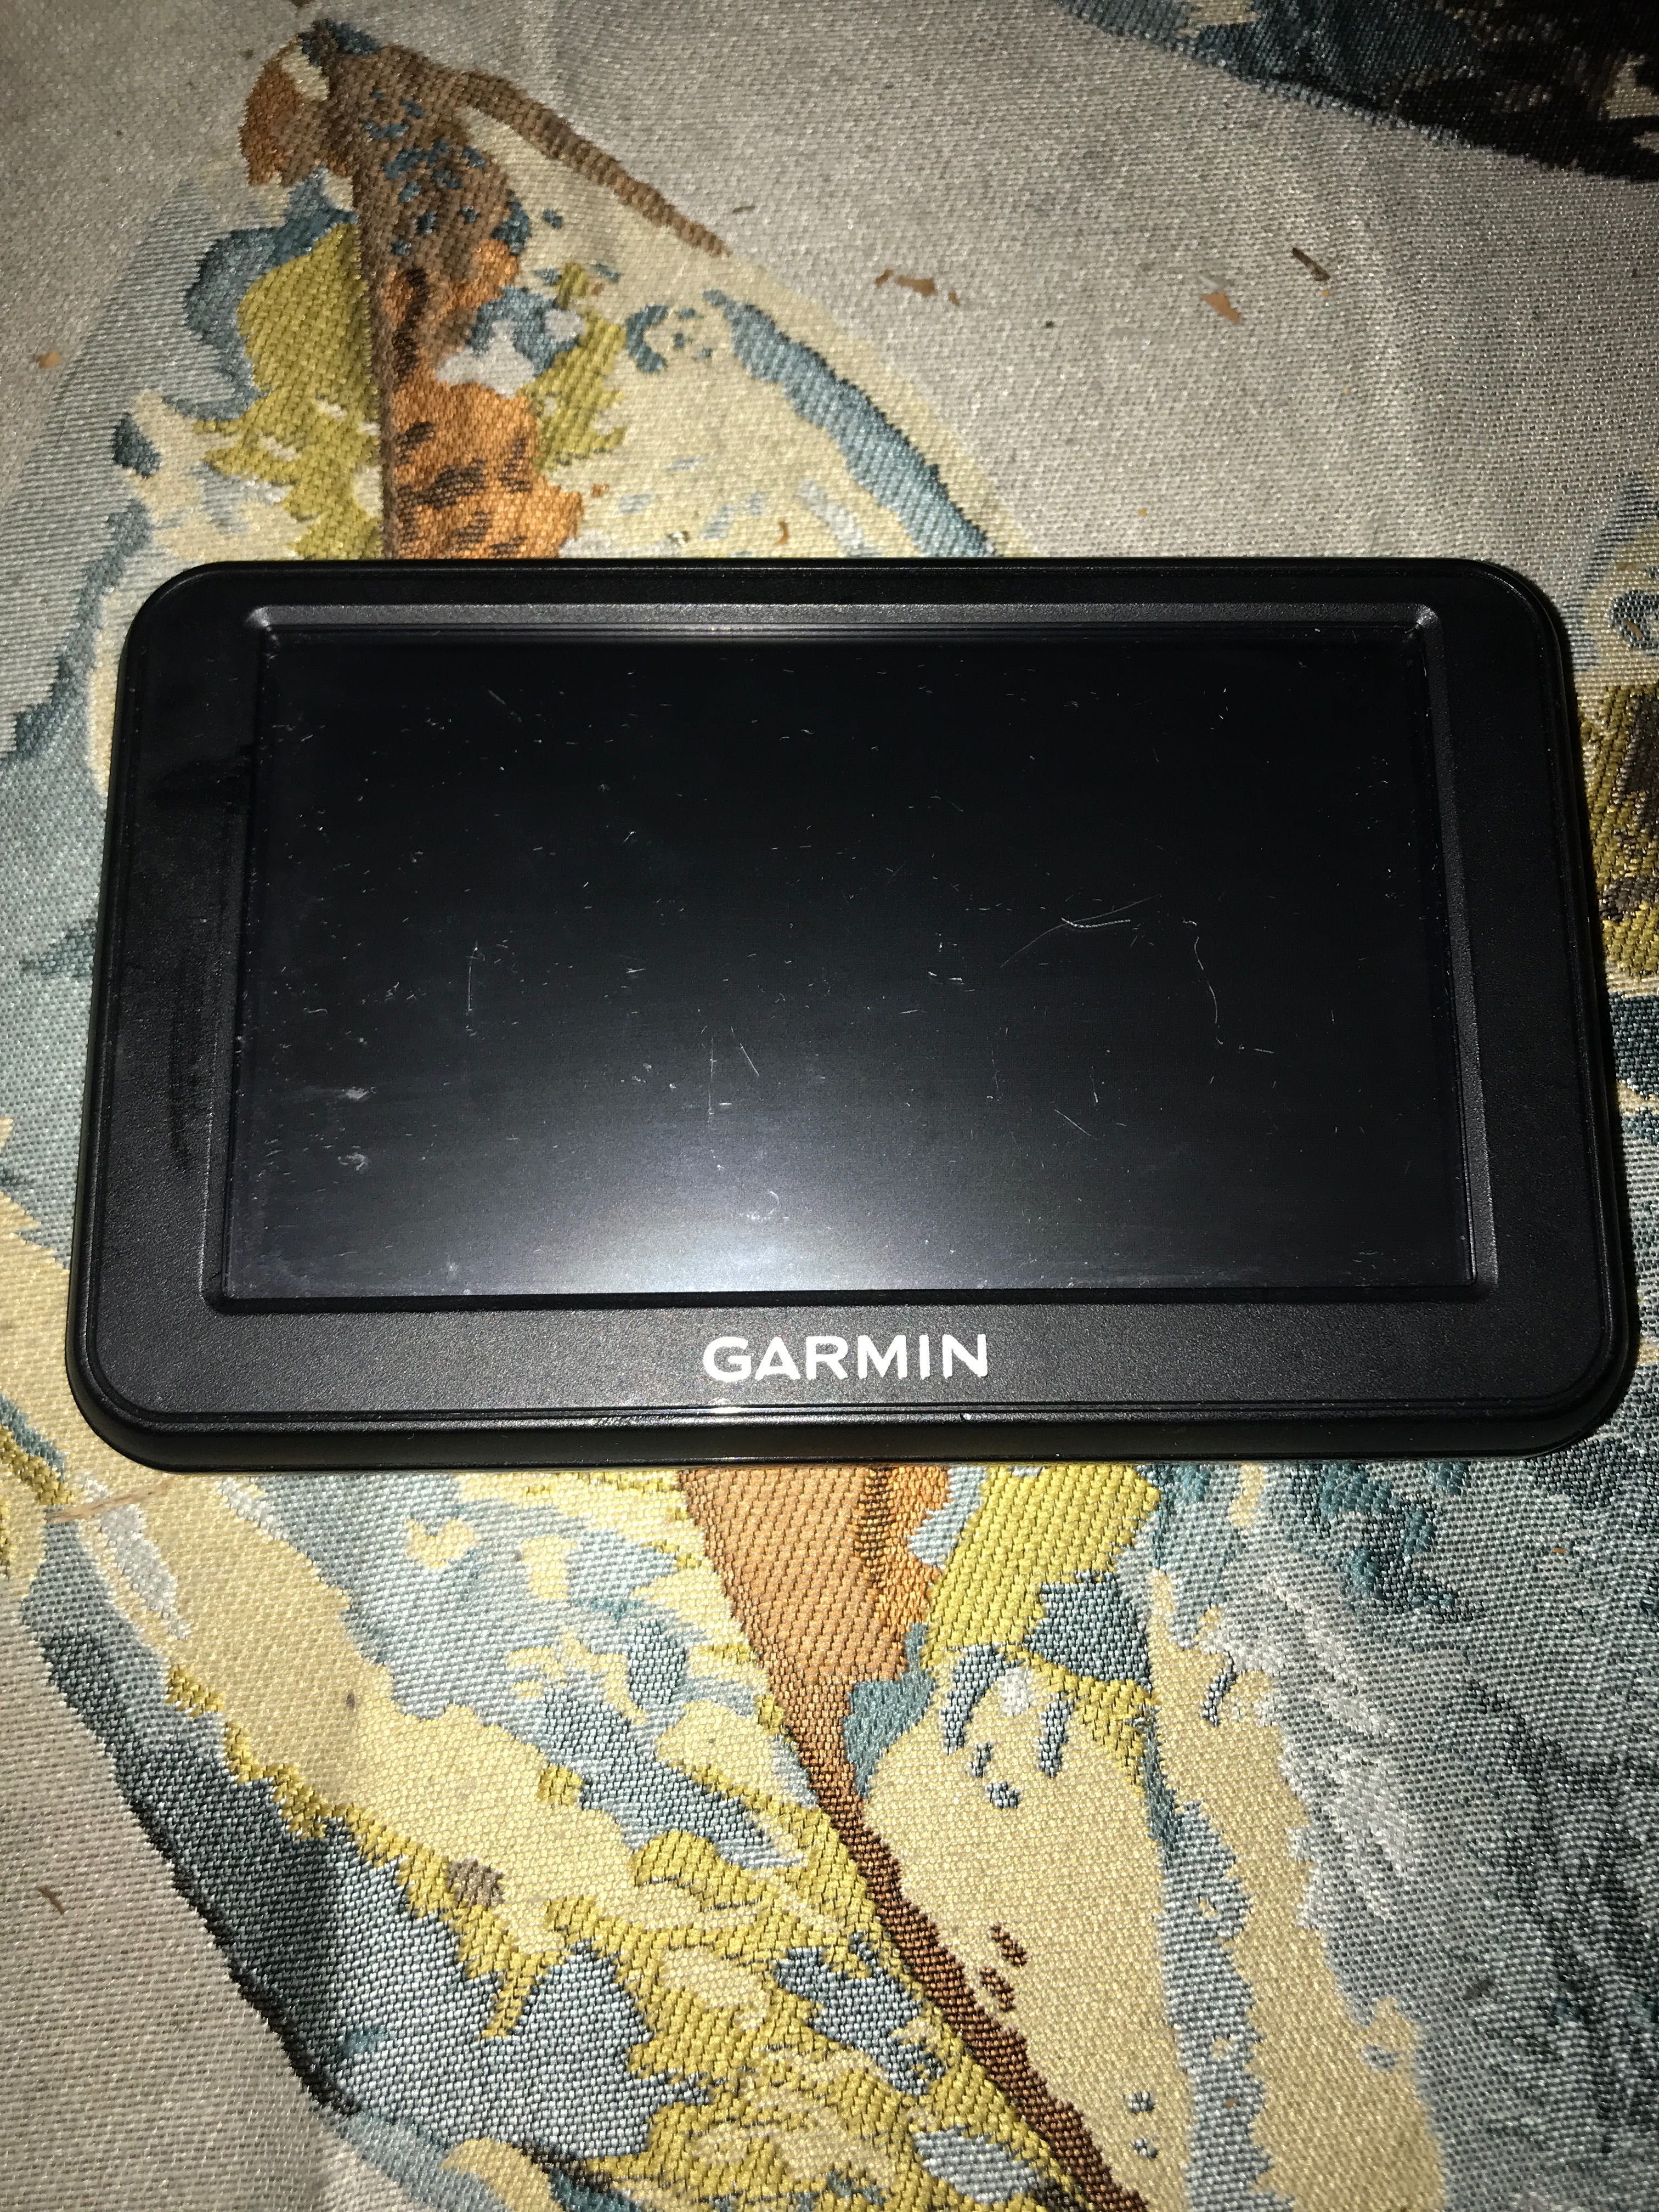 GPS Garmin sistema nüvi40